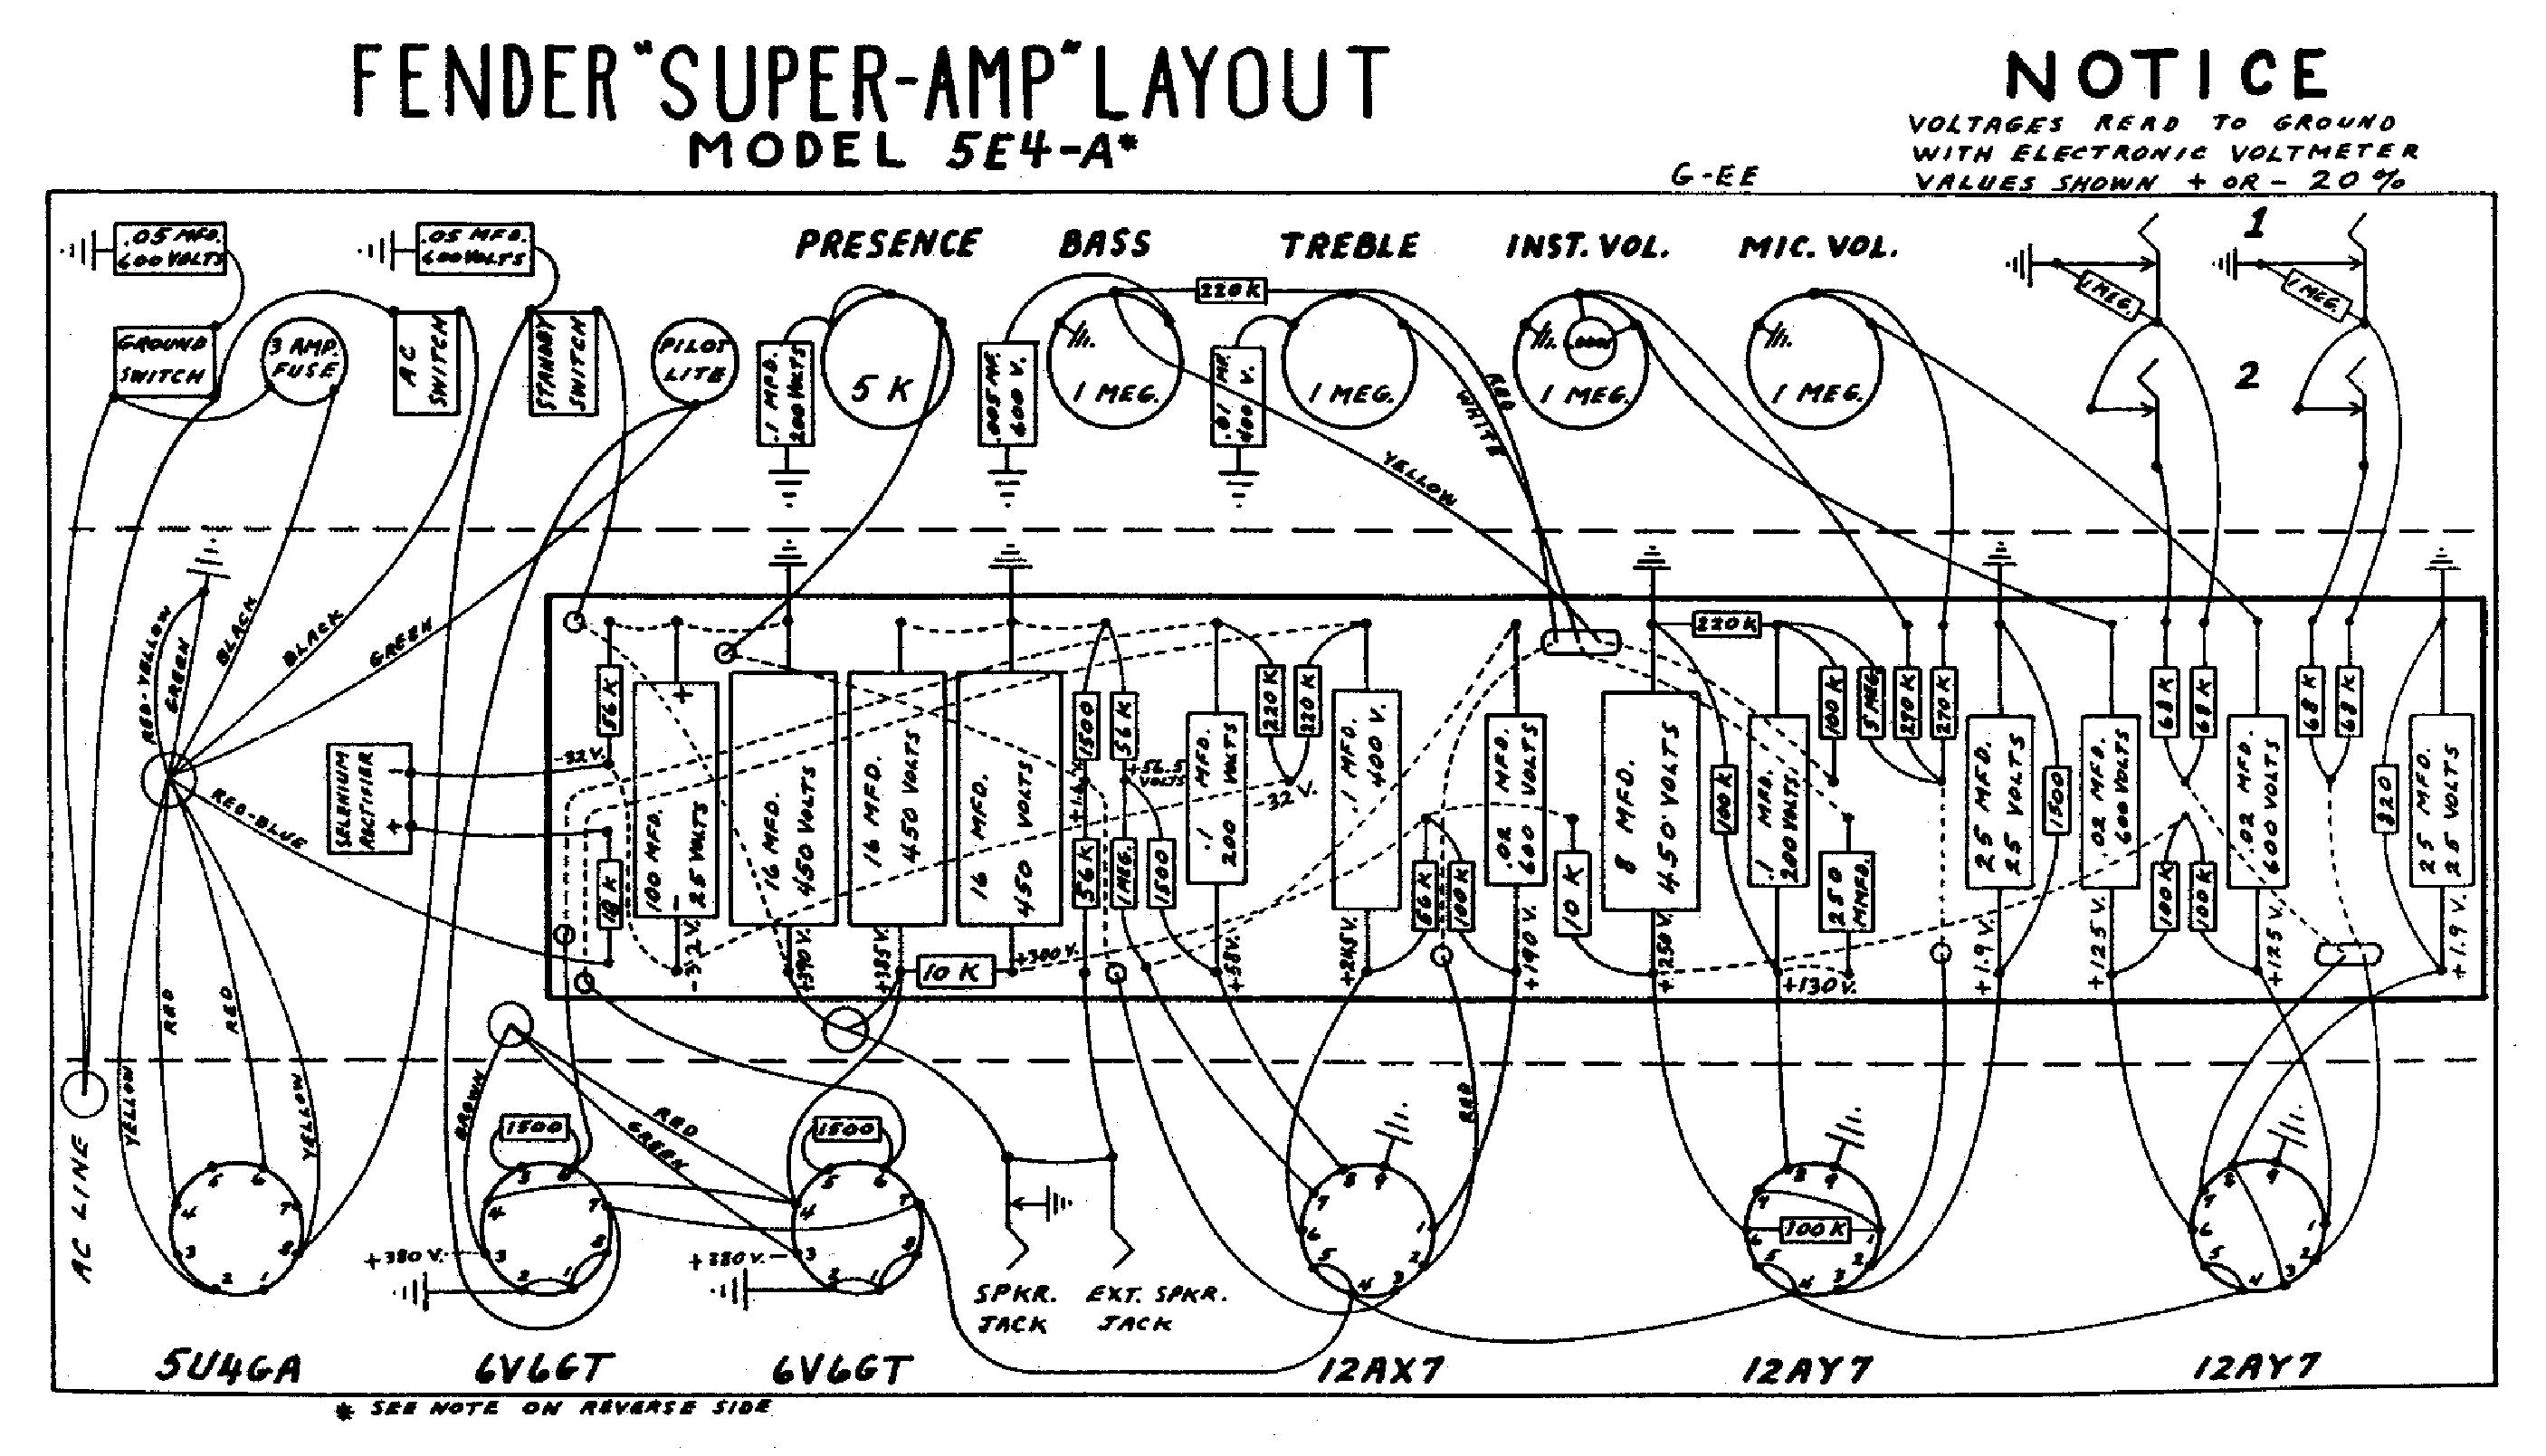 FENDER SUPER-AMP-5E4A-LAYOUT service manual (1st page)